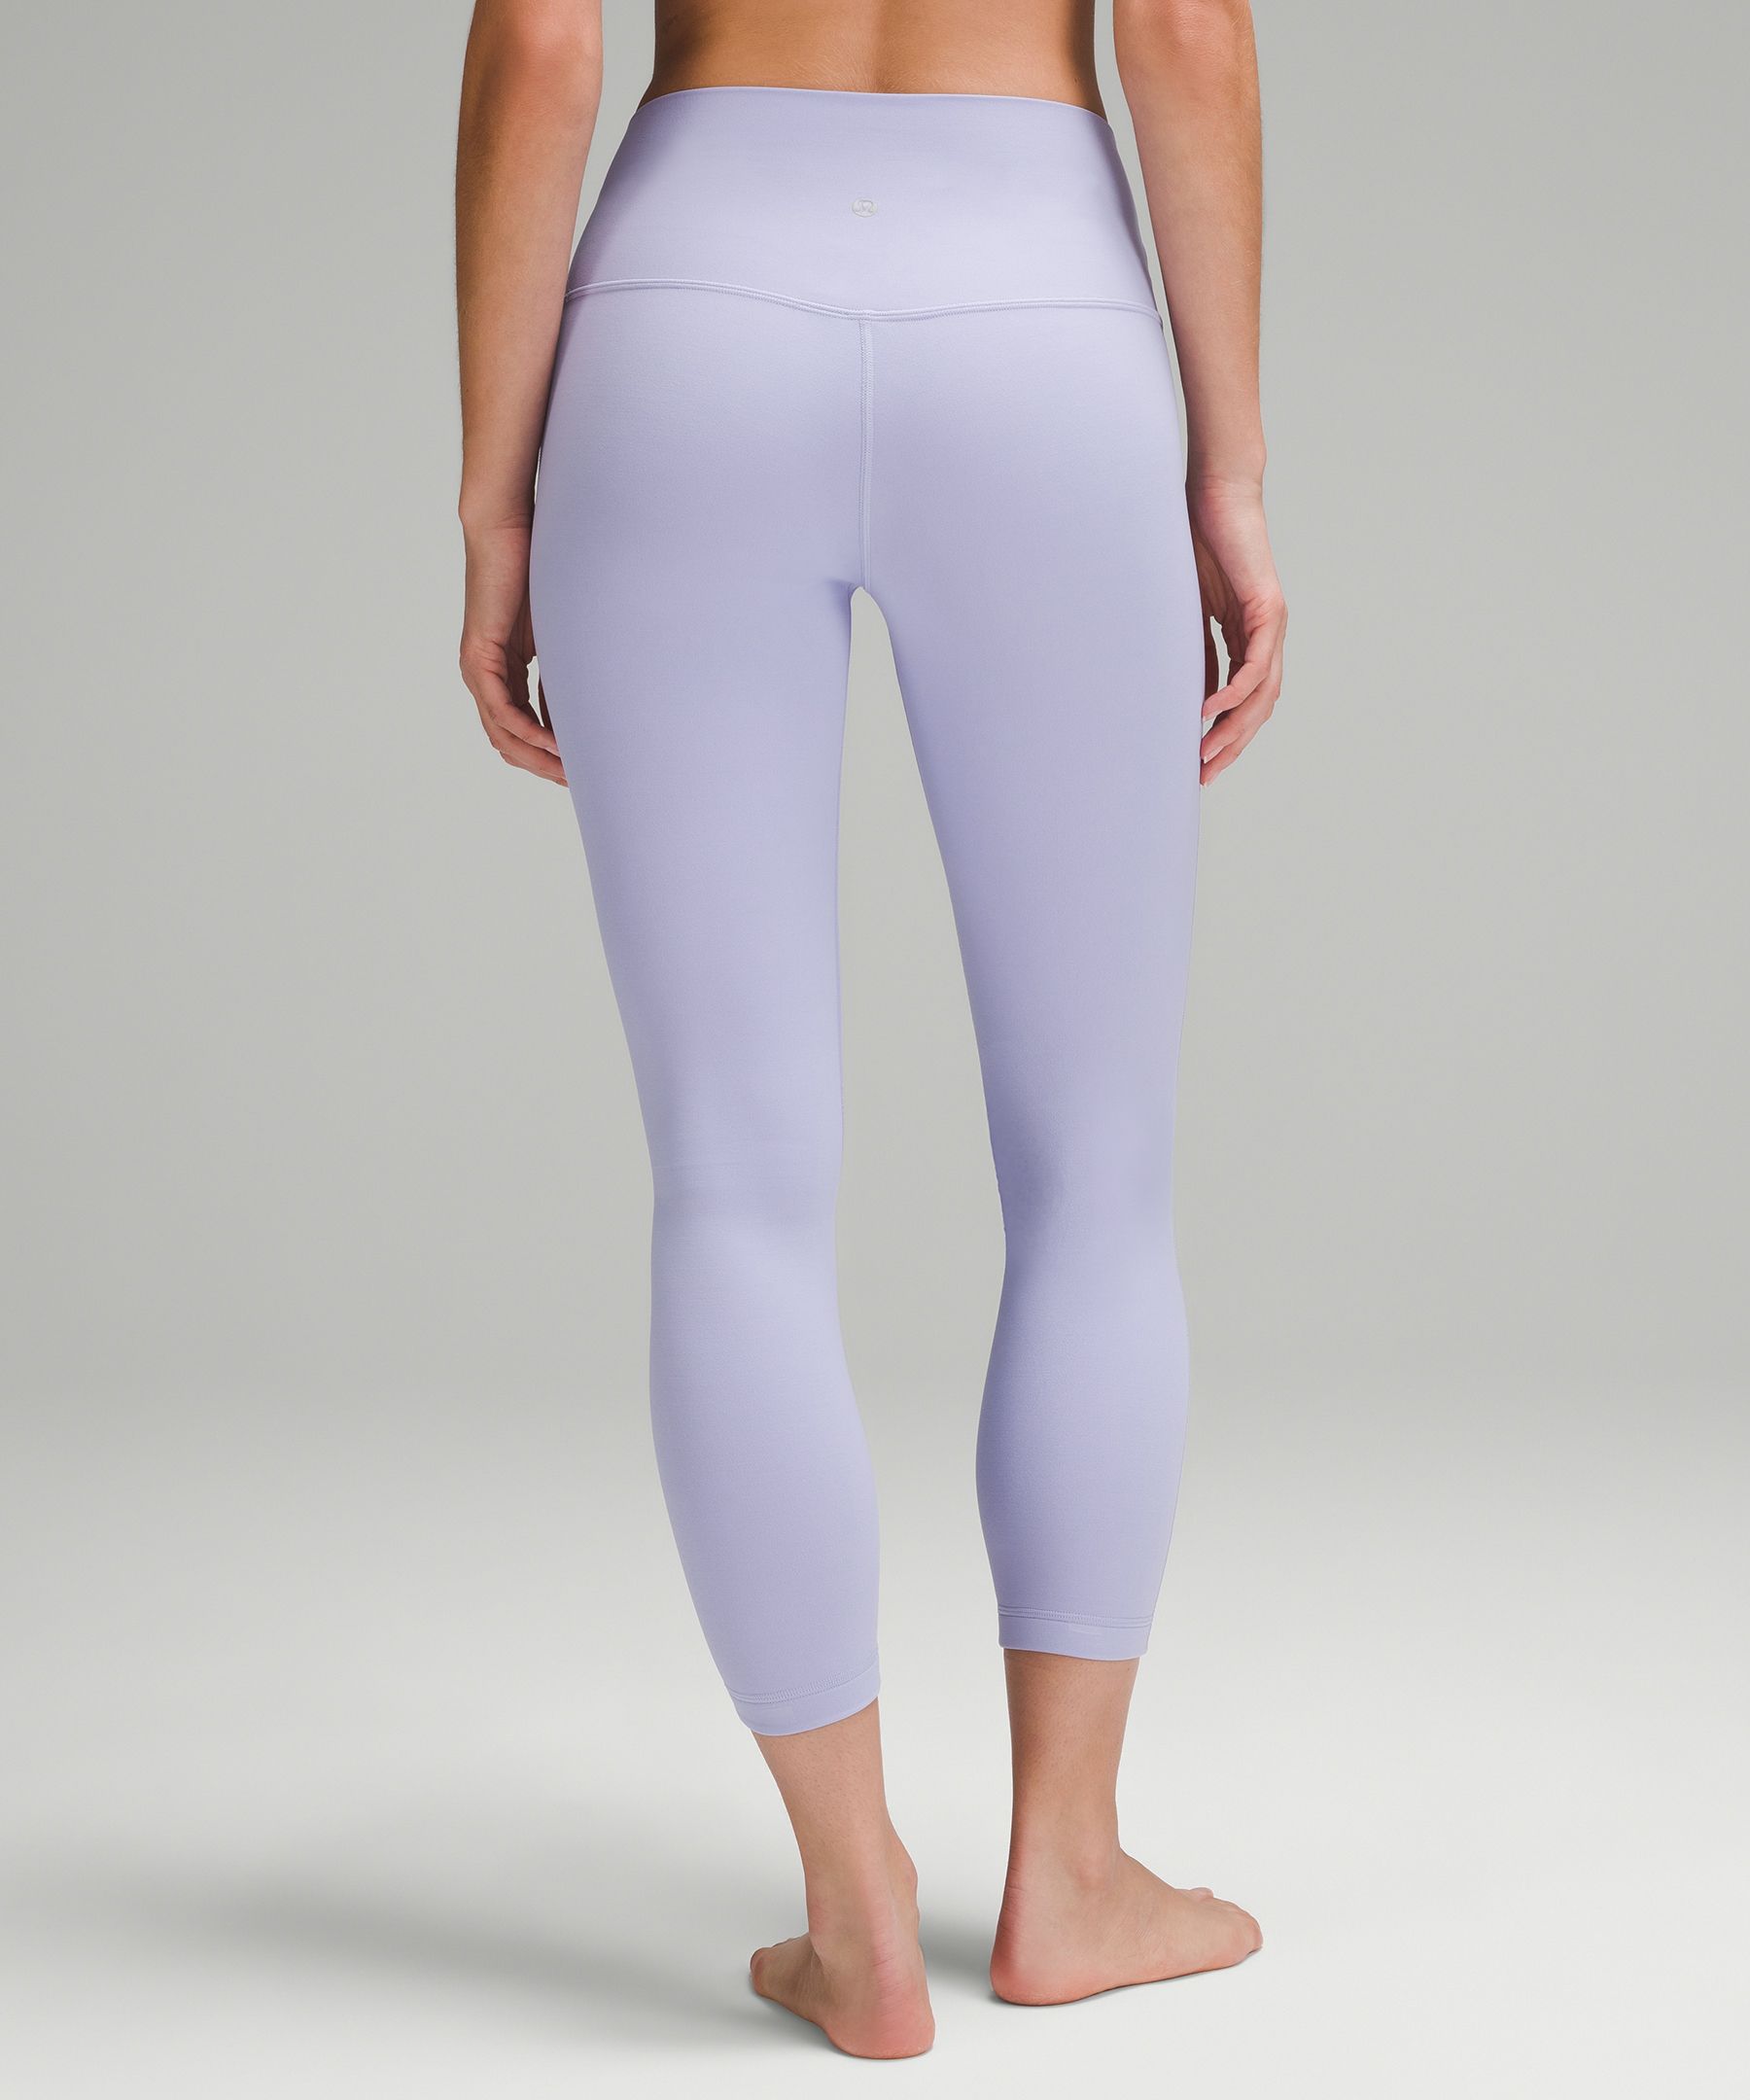 lululemon athletica, Pants & Jumpsuits, Lululemon Double Lined Align  Leggings Size 4 Light Blue Retail 98 Selling 5